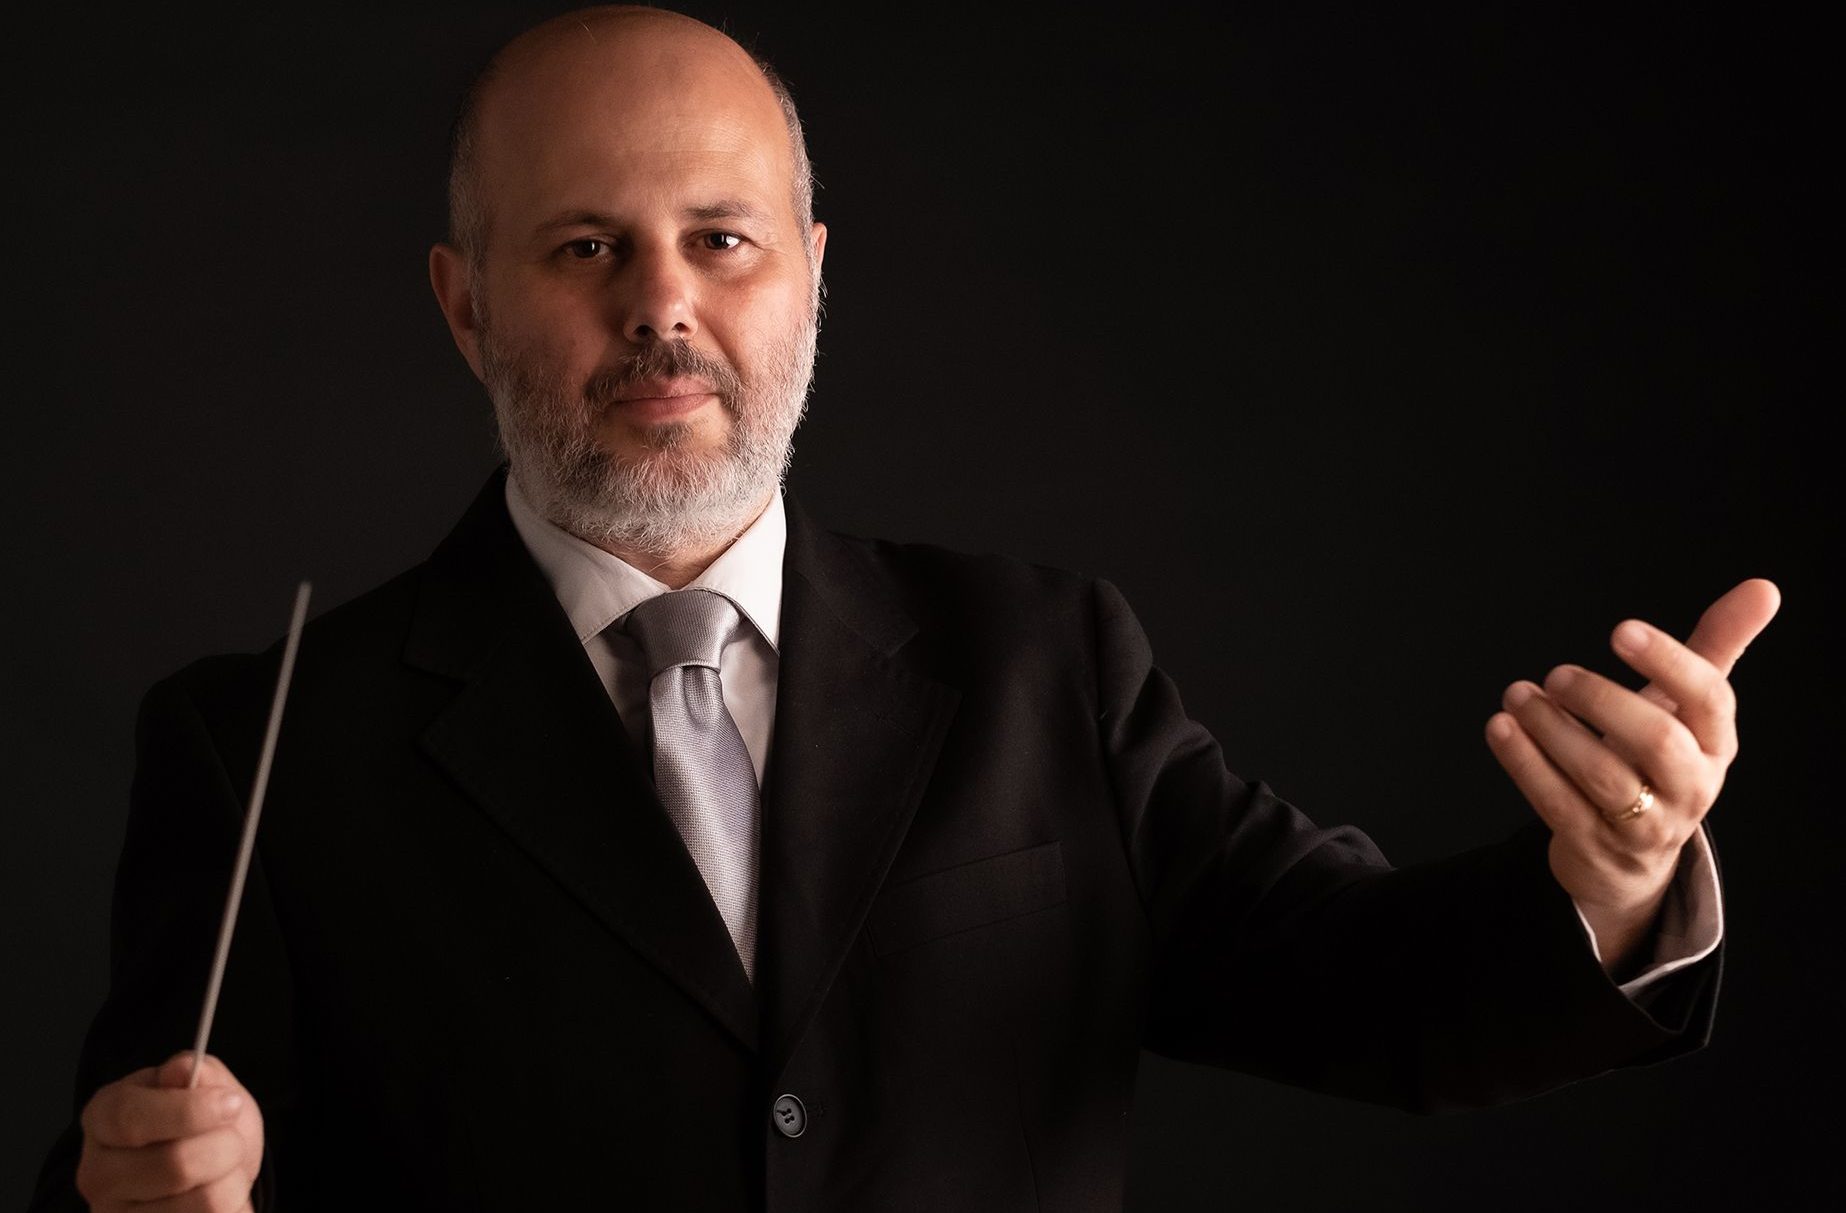 Francesco Di Mauro professore di direzione d’orchestra in una masterclass in Spagna